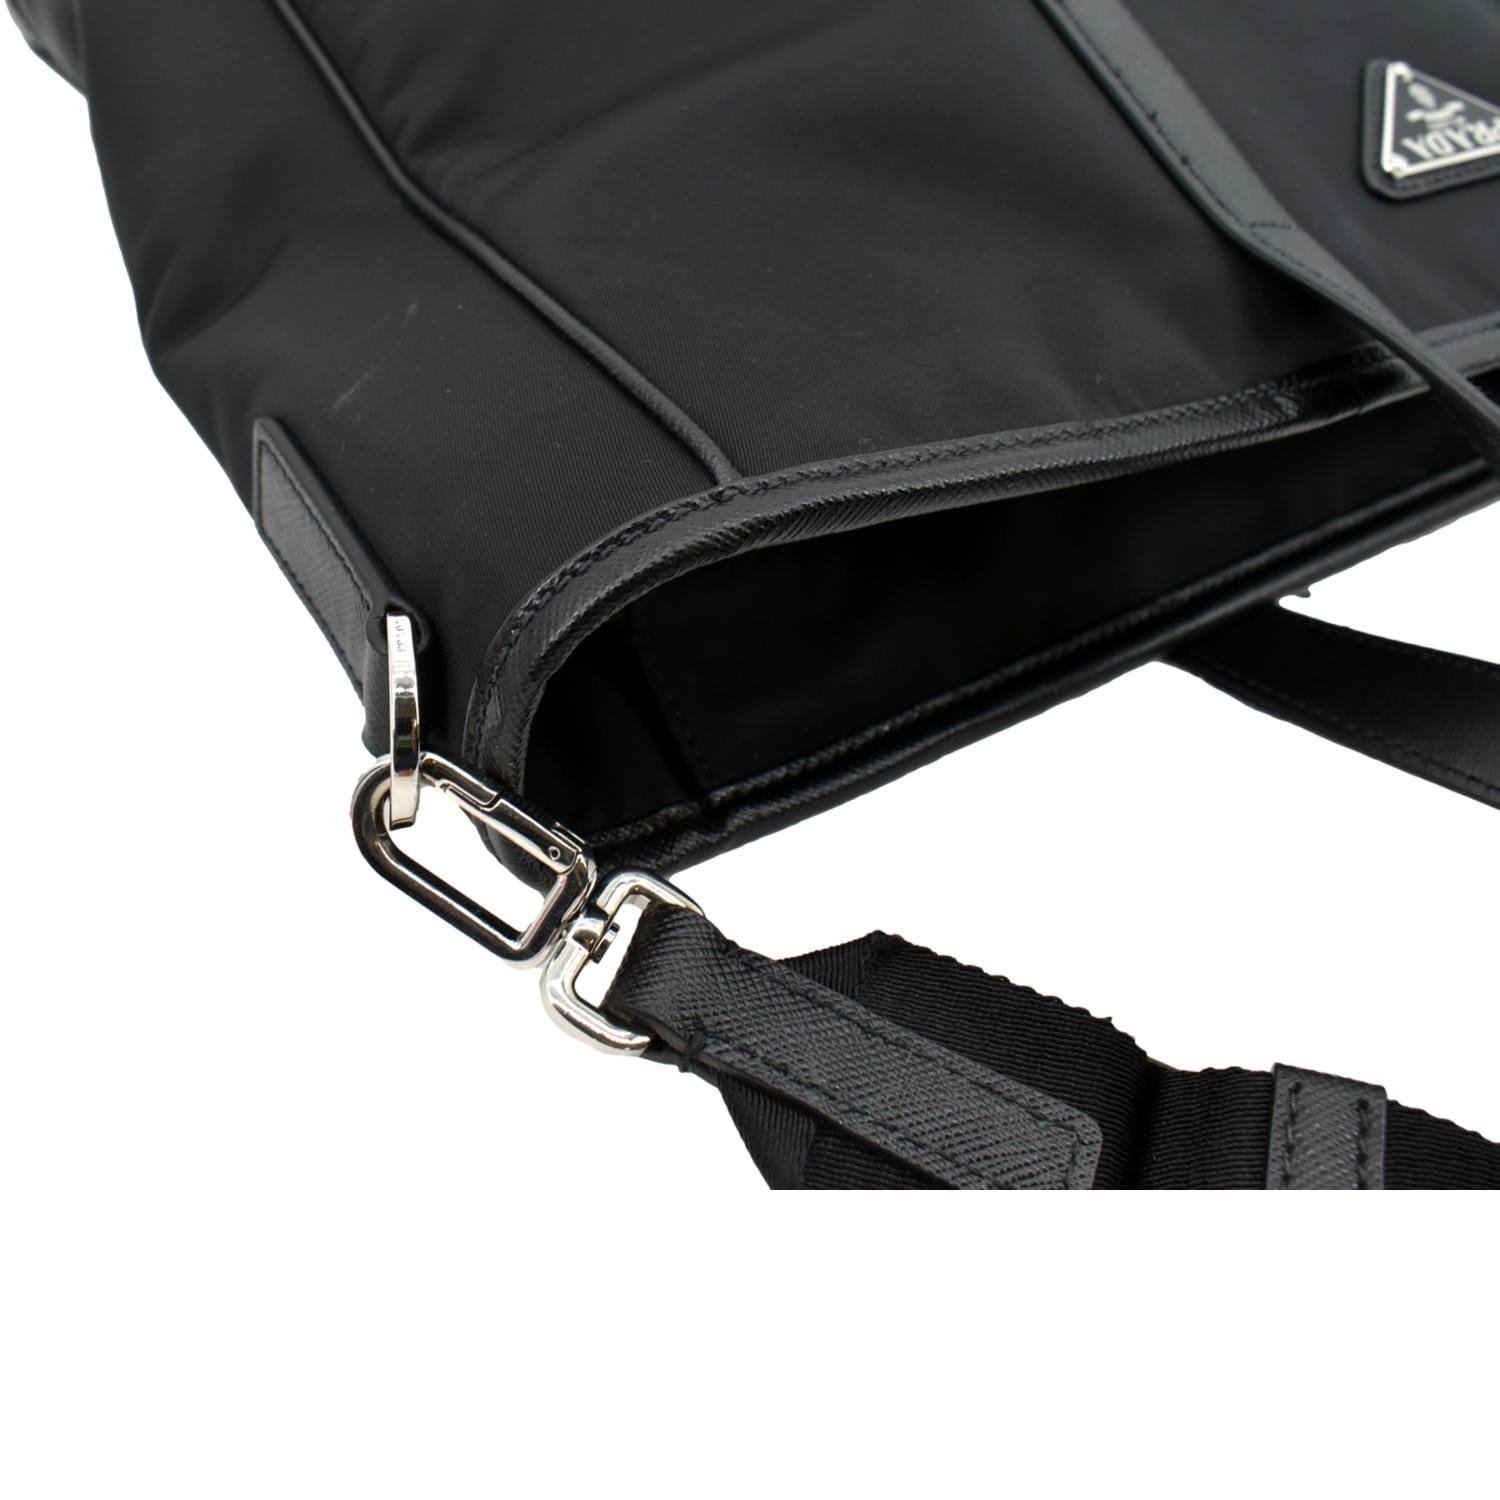 Black Re-nylon Tote Bag